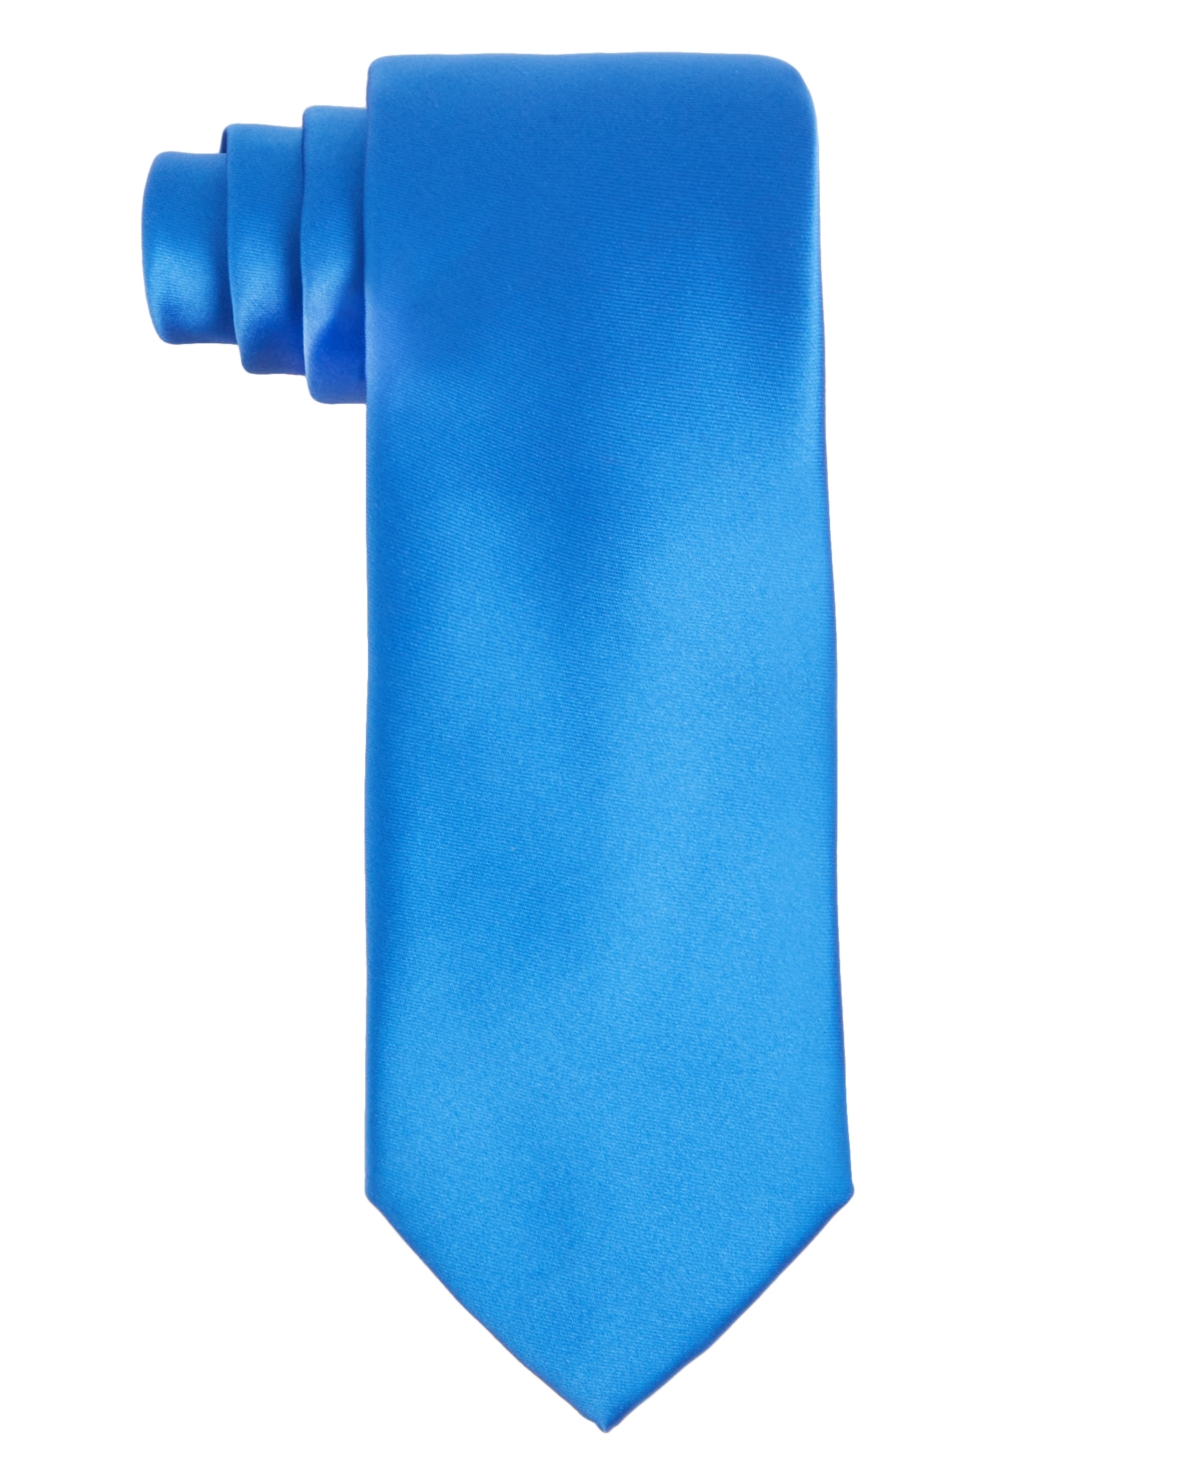 Men's Royal Blue & White Solid Tie - White